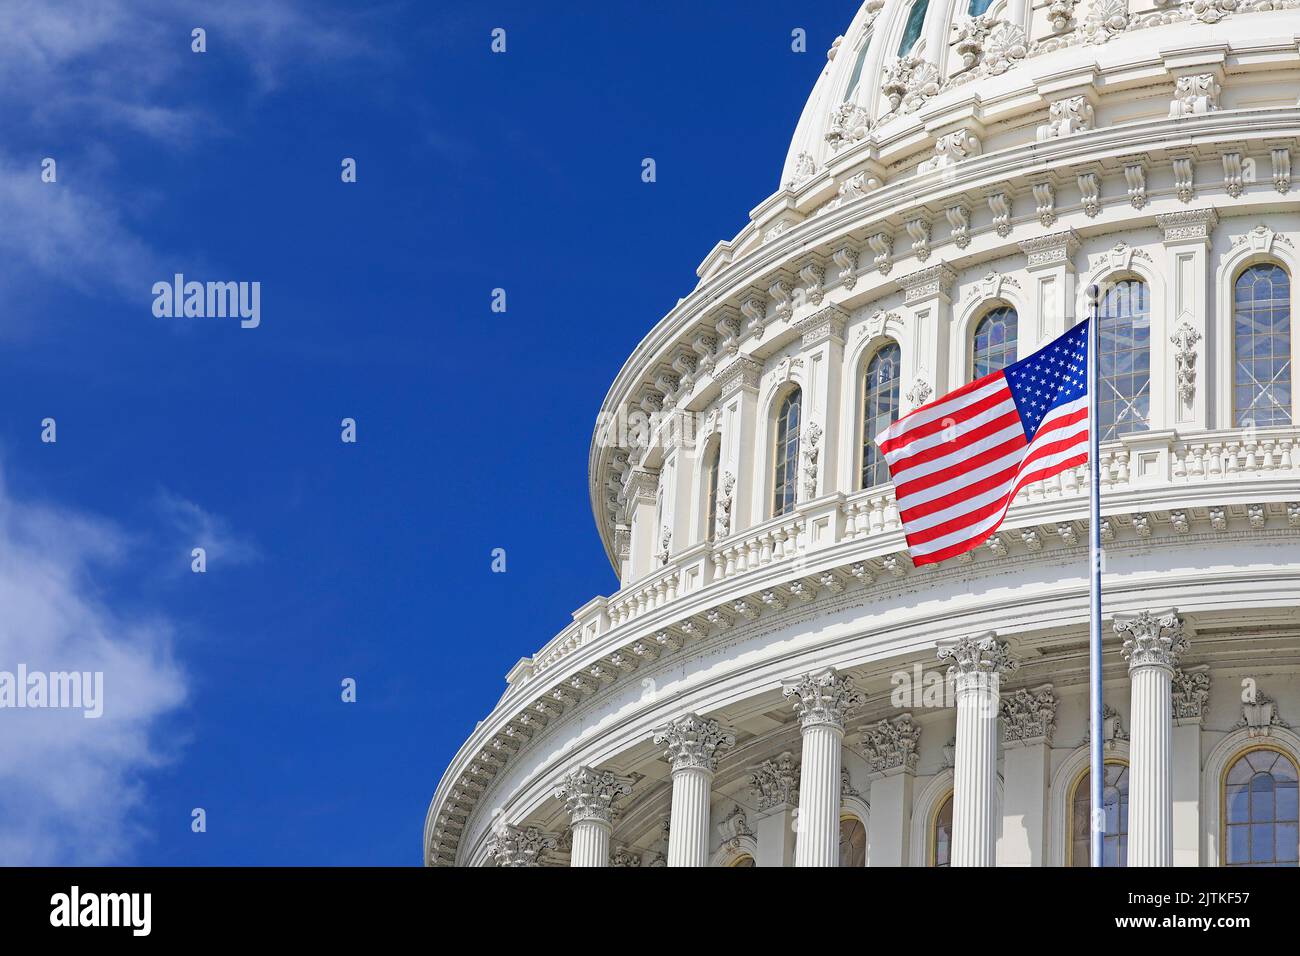 Detalle de cúpula del Capitolio de Washington DC con bandera americana ondulada Foto de stock